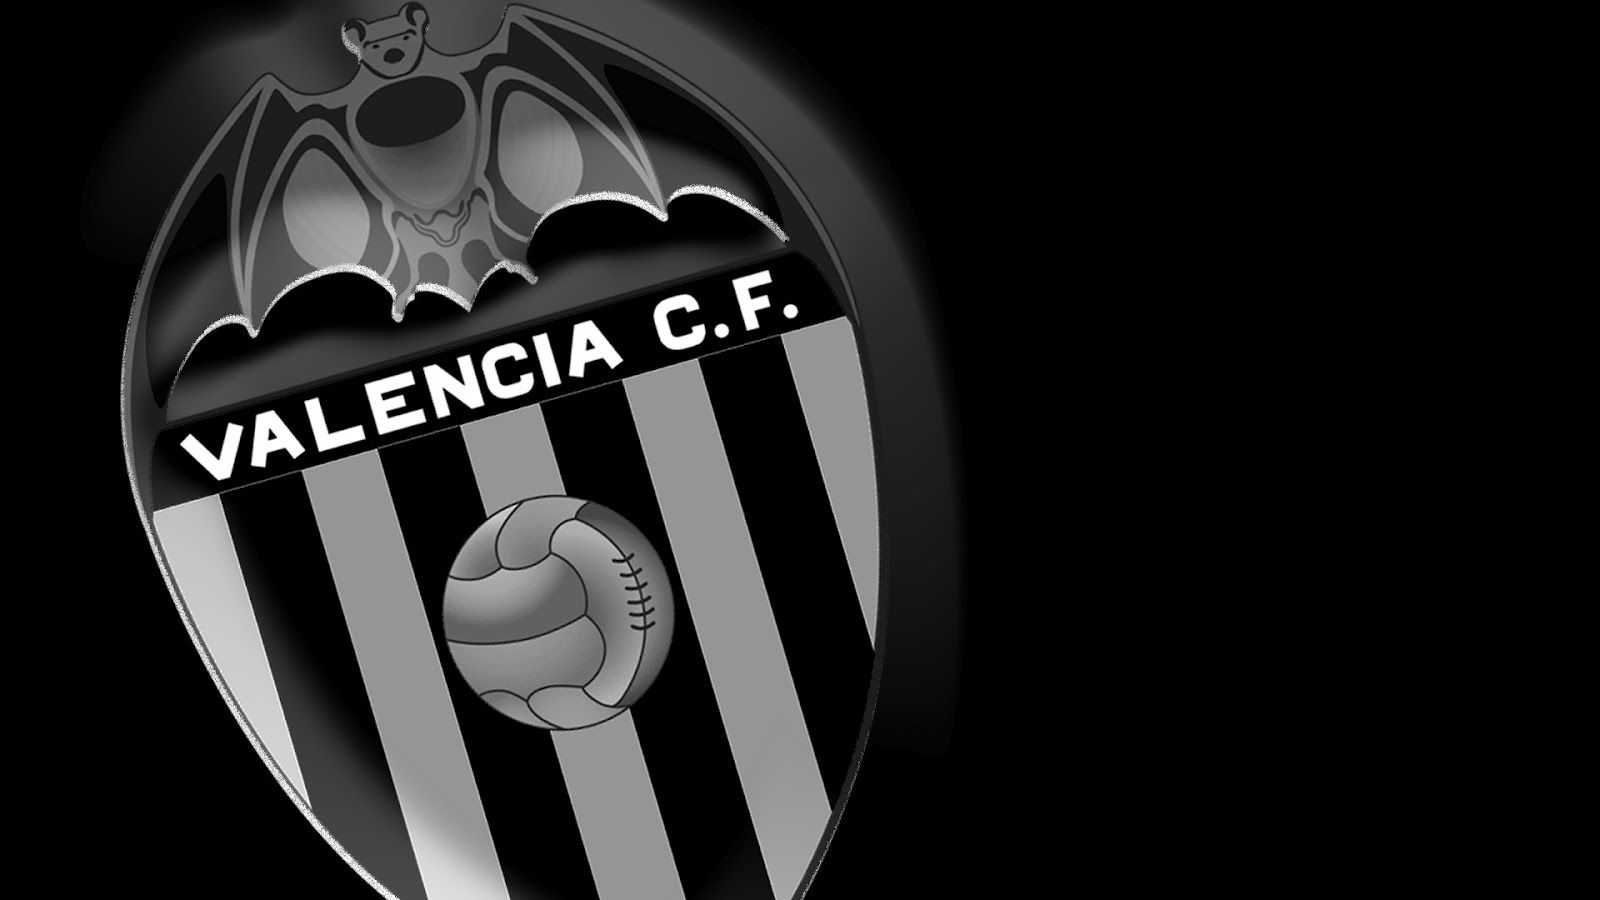 Valencia CF: Fondos de Valencia CF